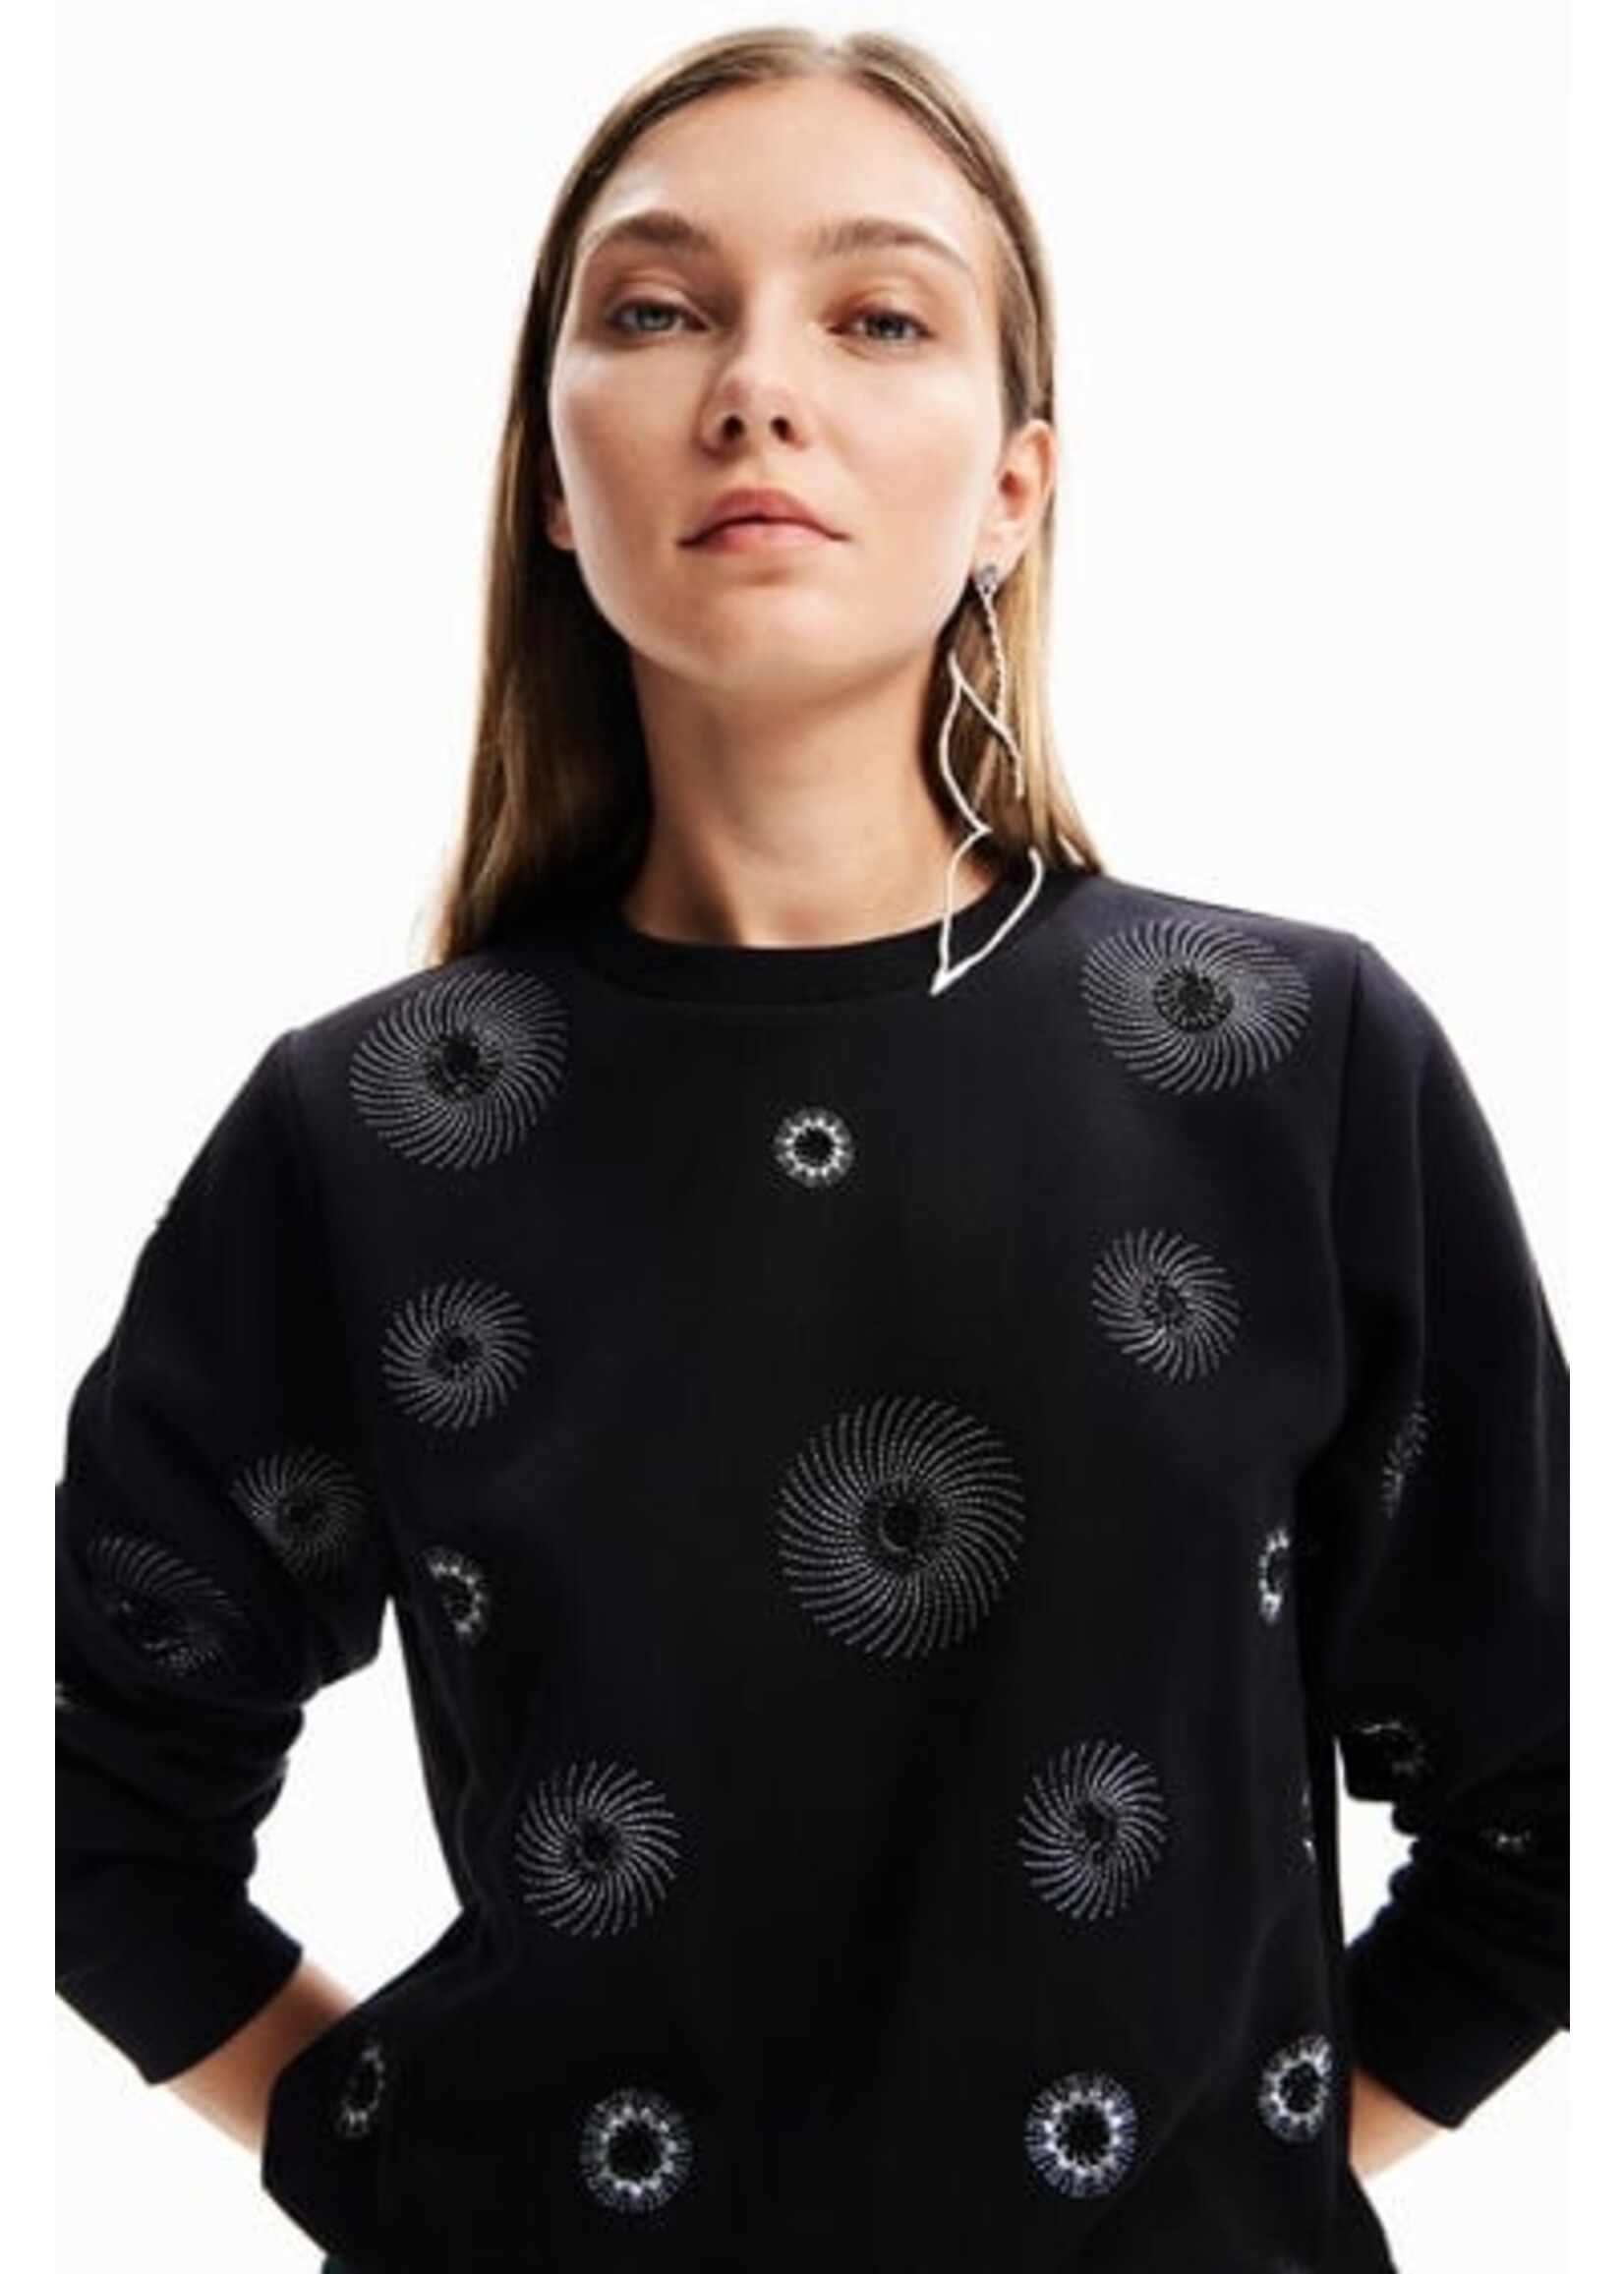 DESIGUAL Geometric embroidered sweatshirt